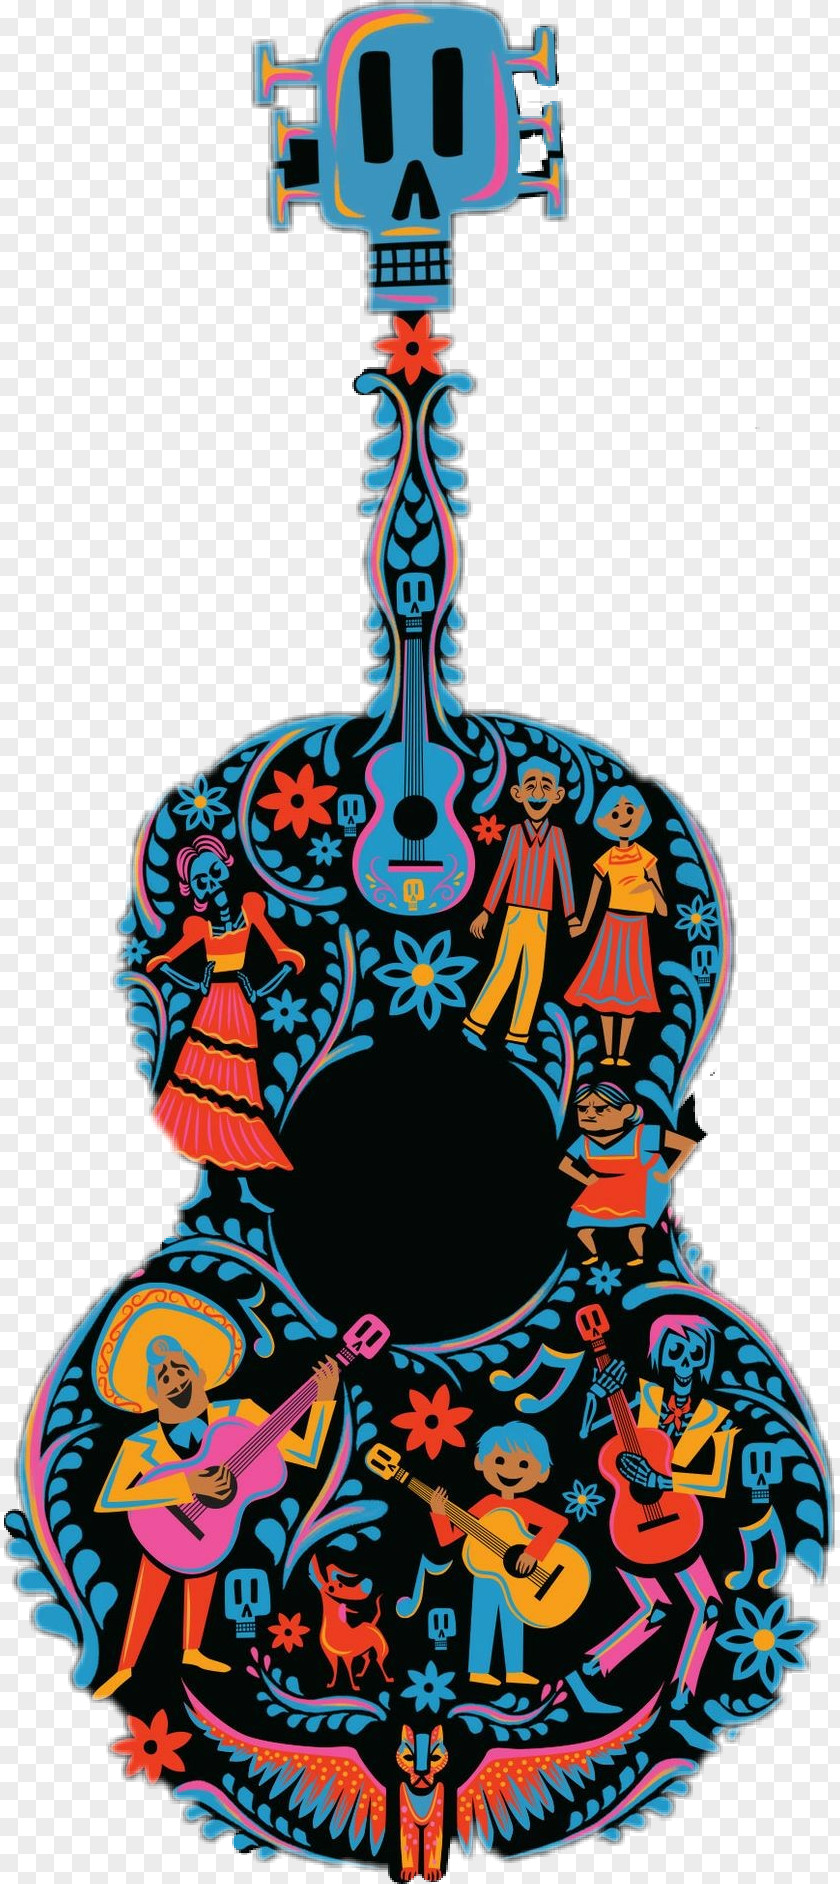 Coco Pixar Clip Art Guitar Pattern Kids' T-Shirt The Walt Disney Company Image PNG